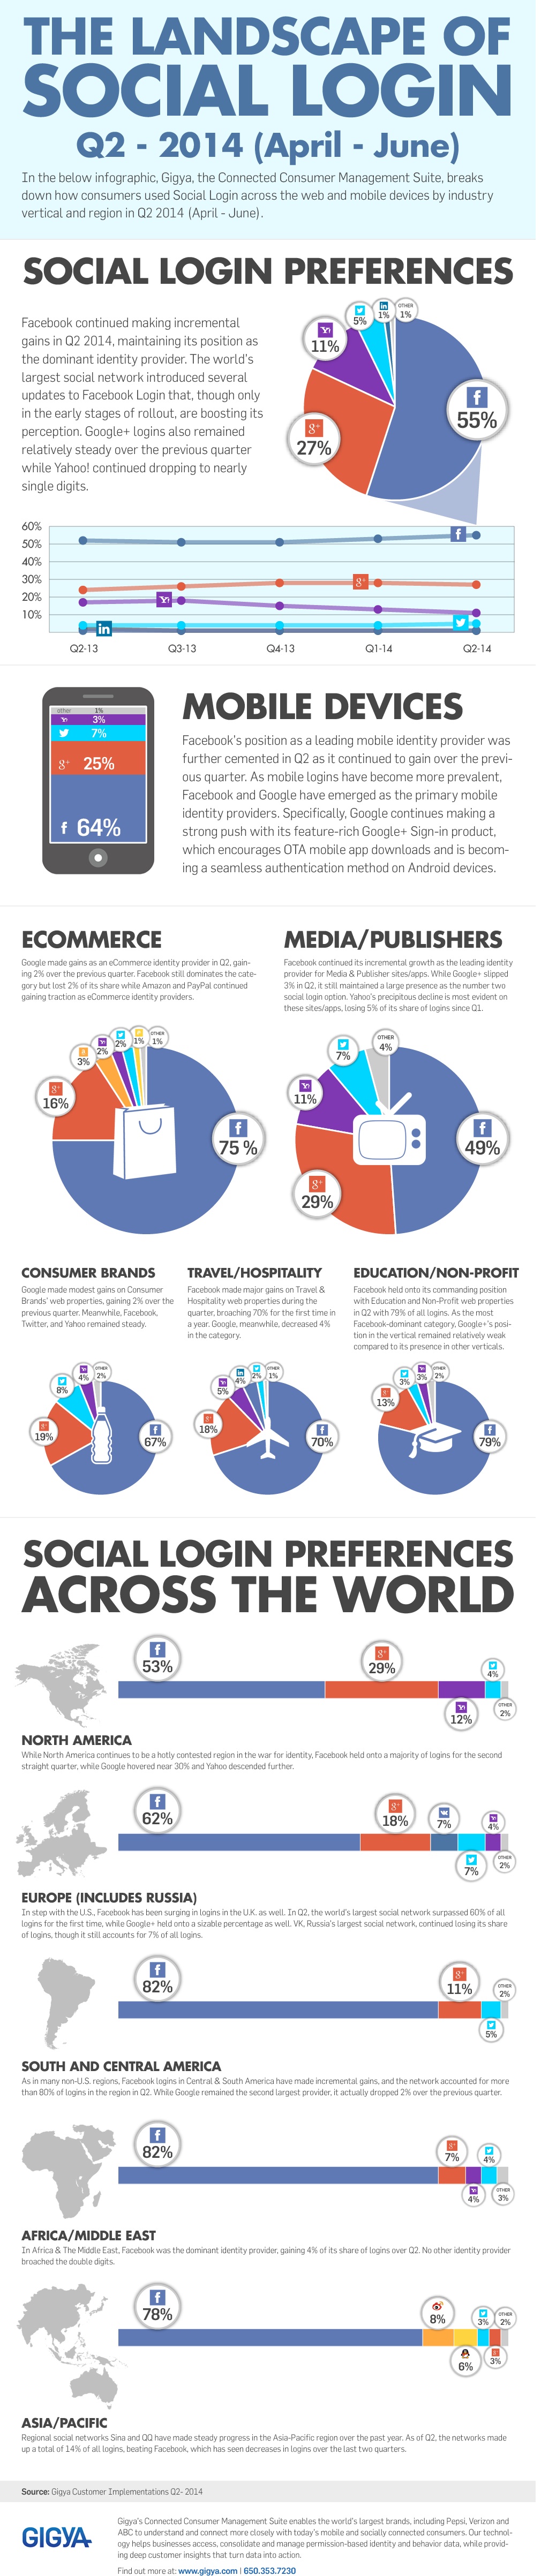 Social-Login-Data_Q2-2014_Gigya